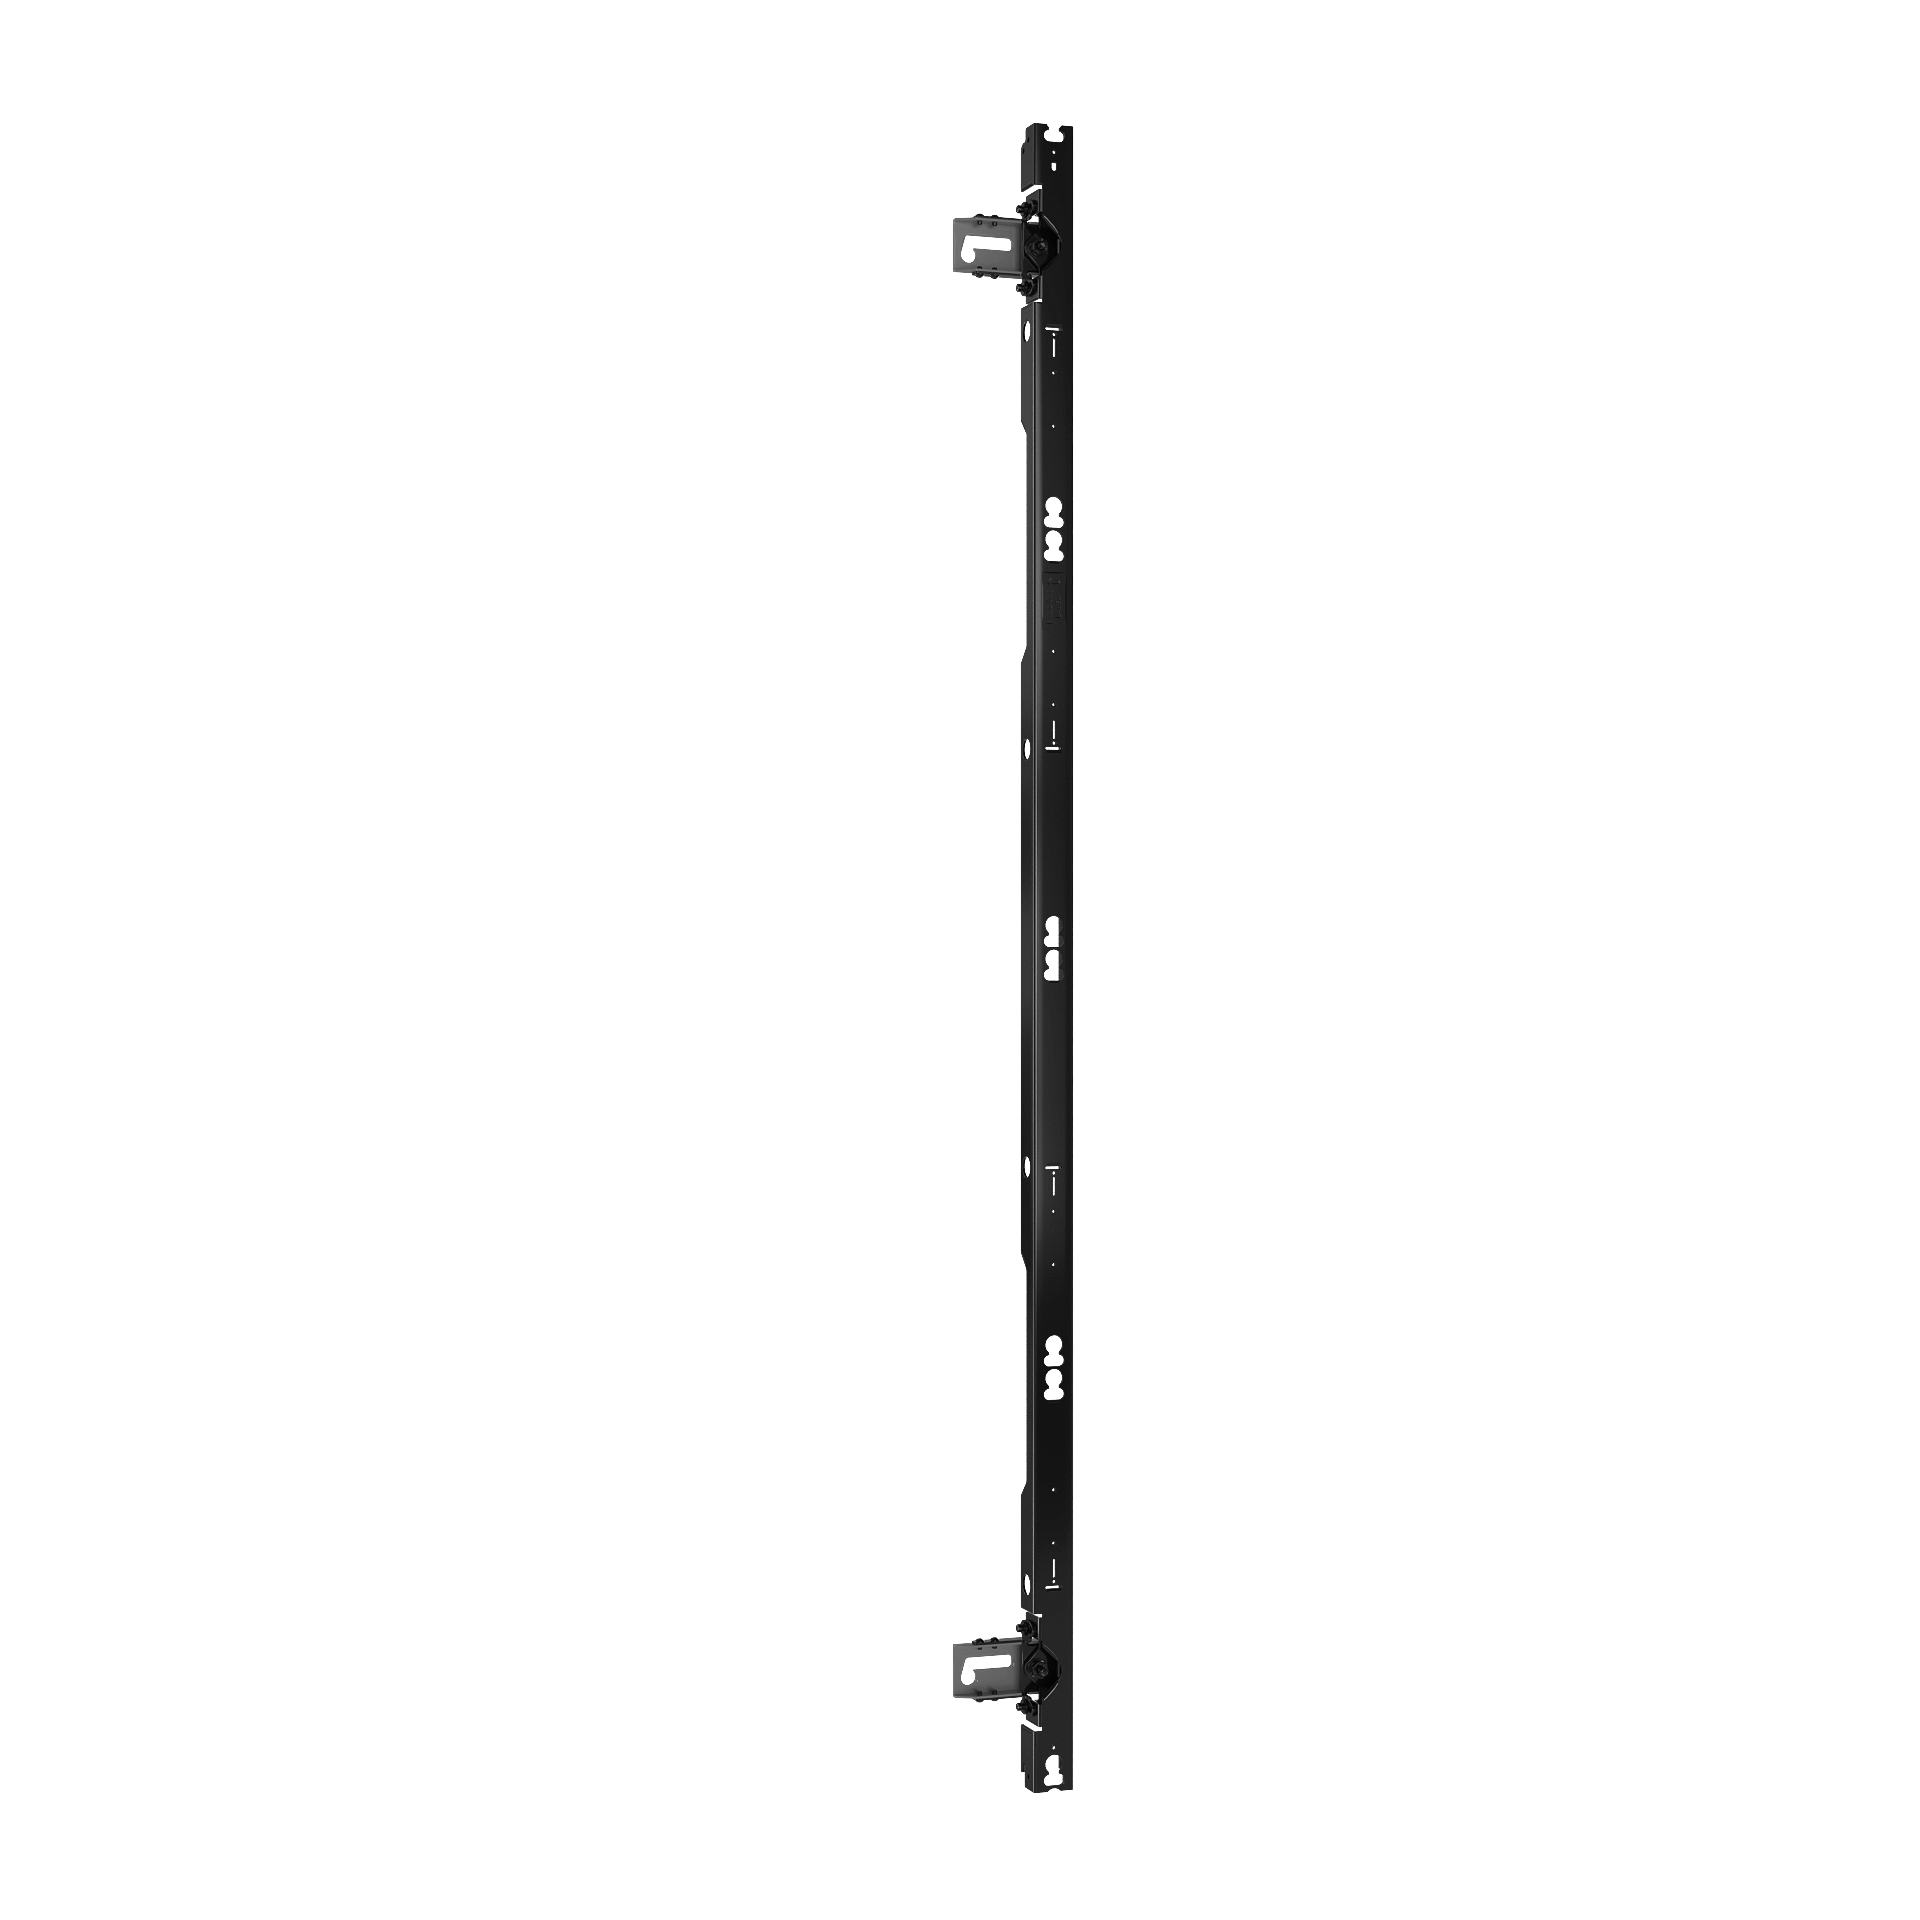 TILD1X4LG2-R Right dvLED Wall Mount for LG LSCB Series Ultra Slim, 4 Displays Tall